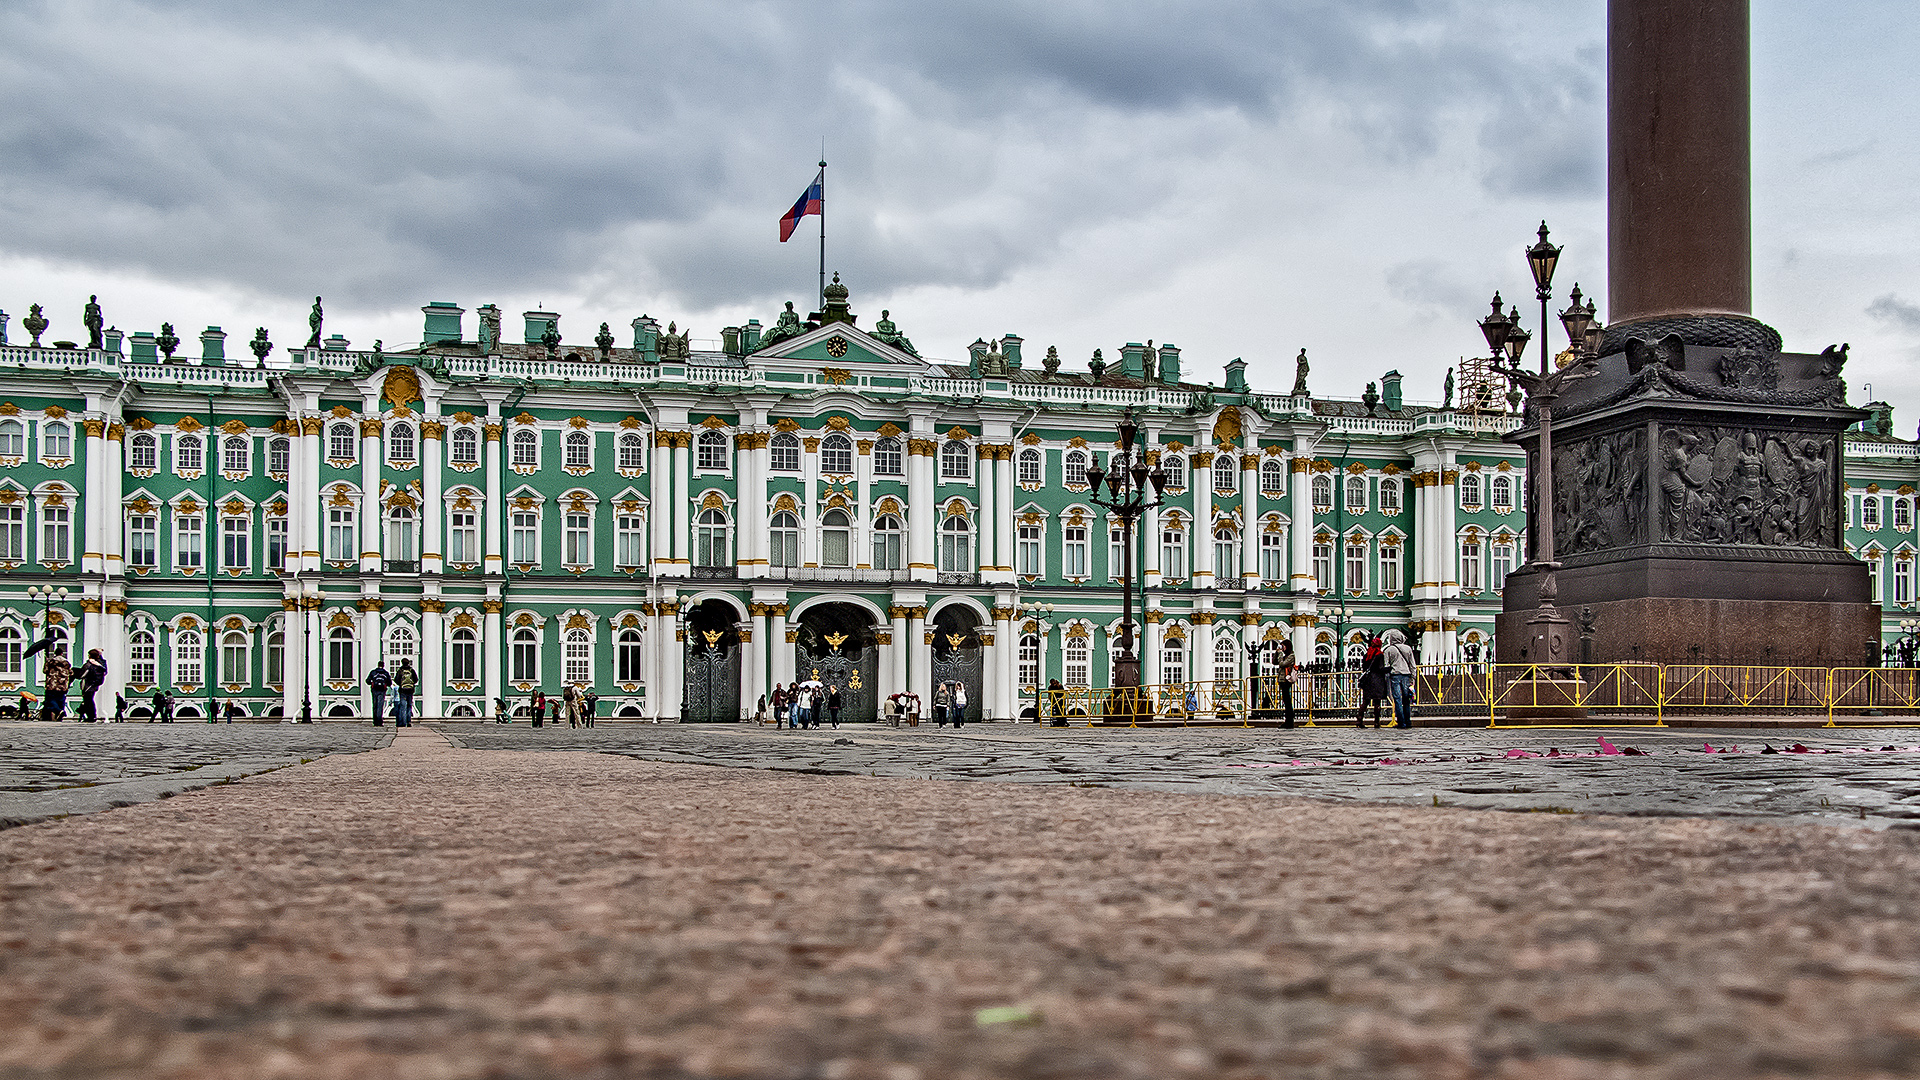 Sankt Petersburg, Winterpalast der russischen Zaren